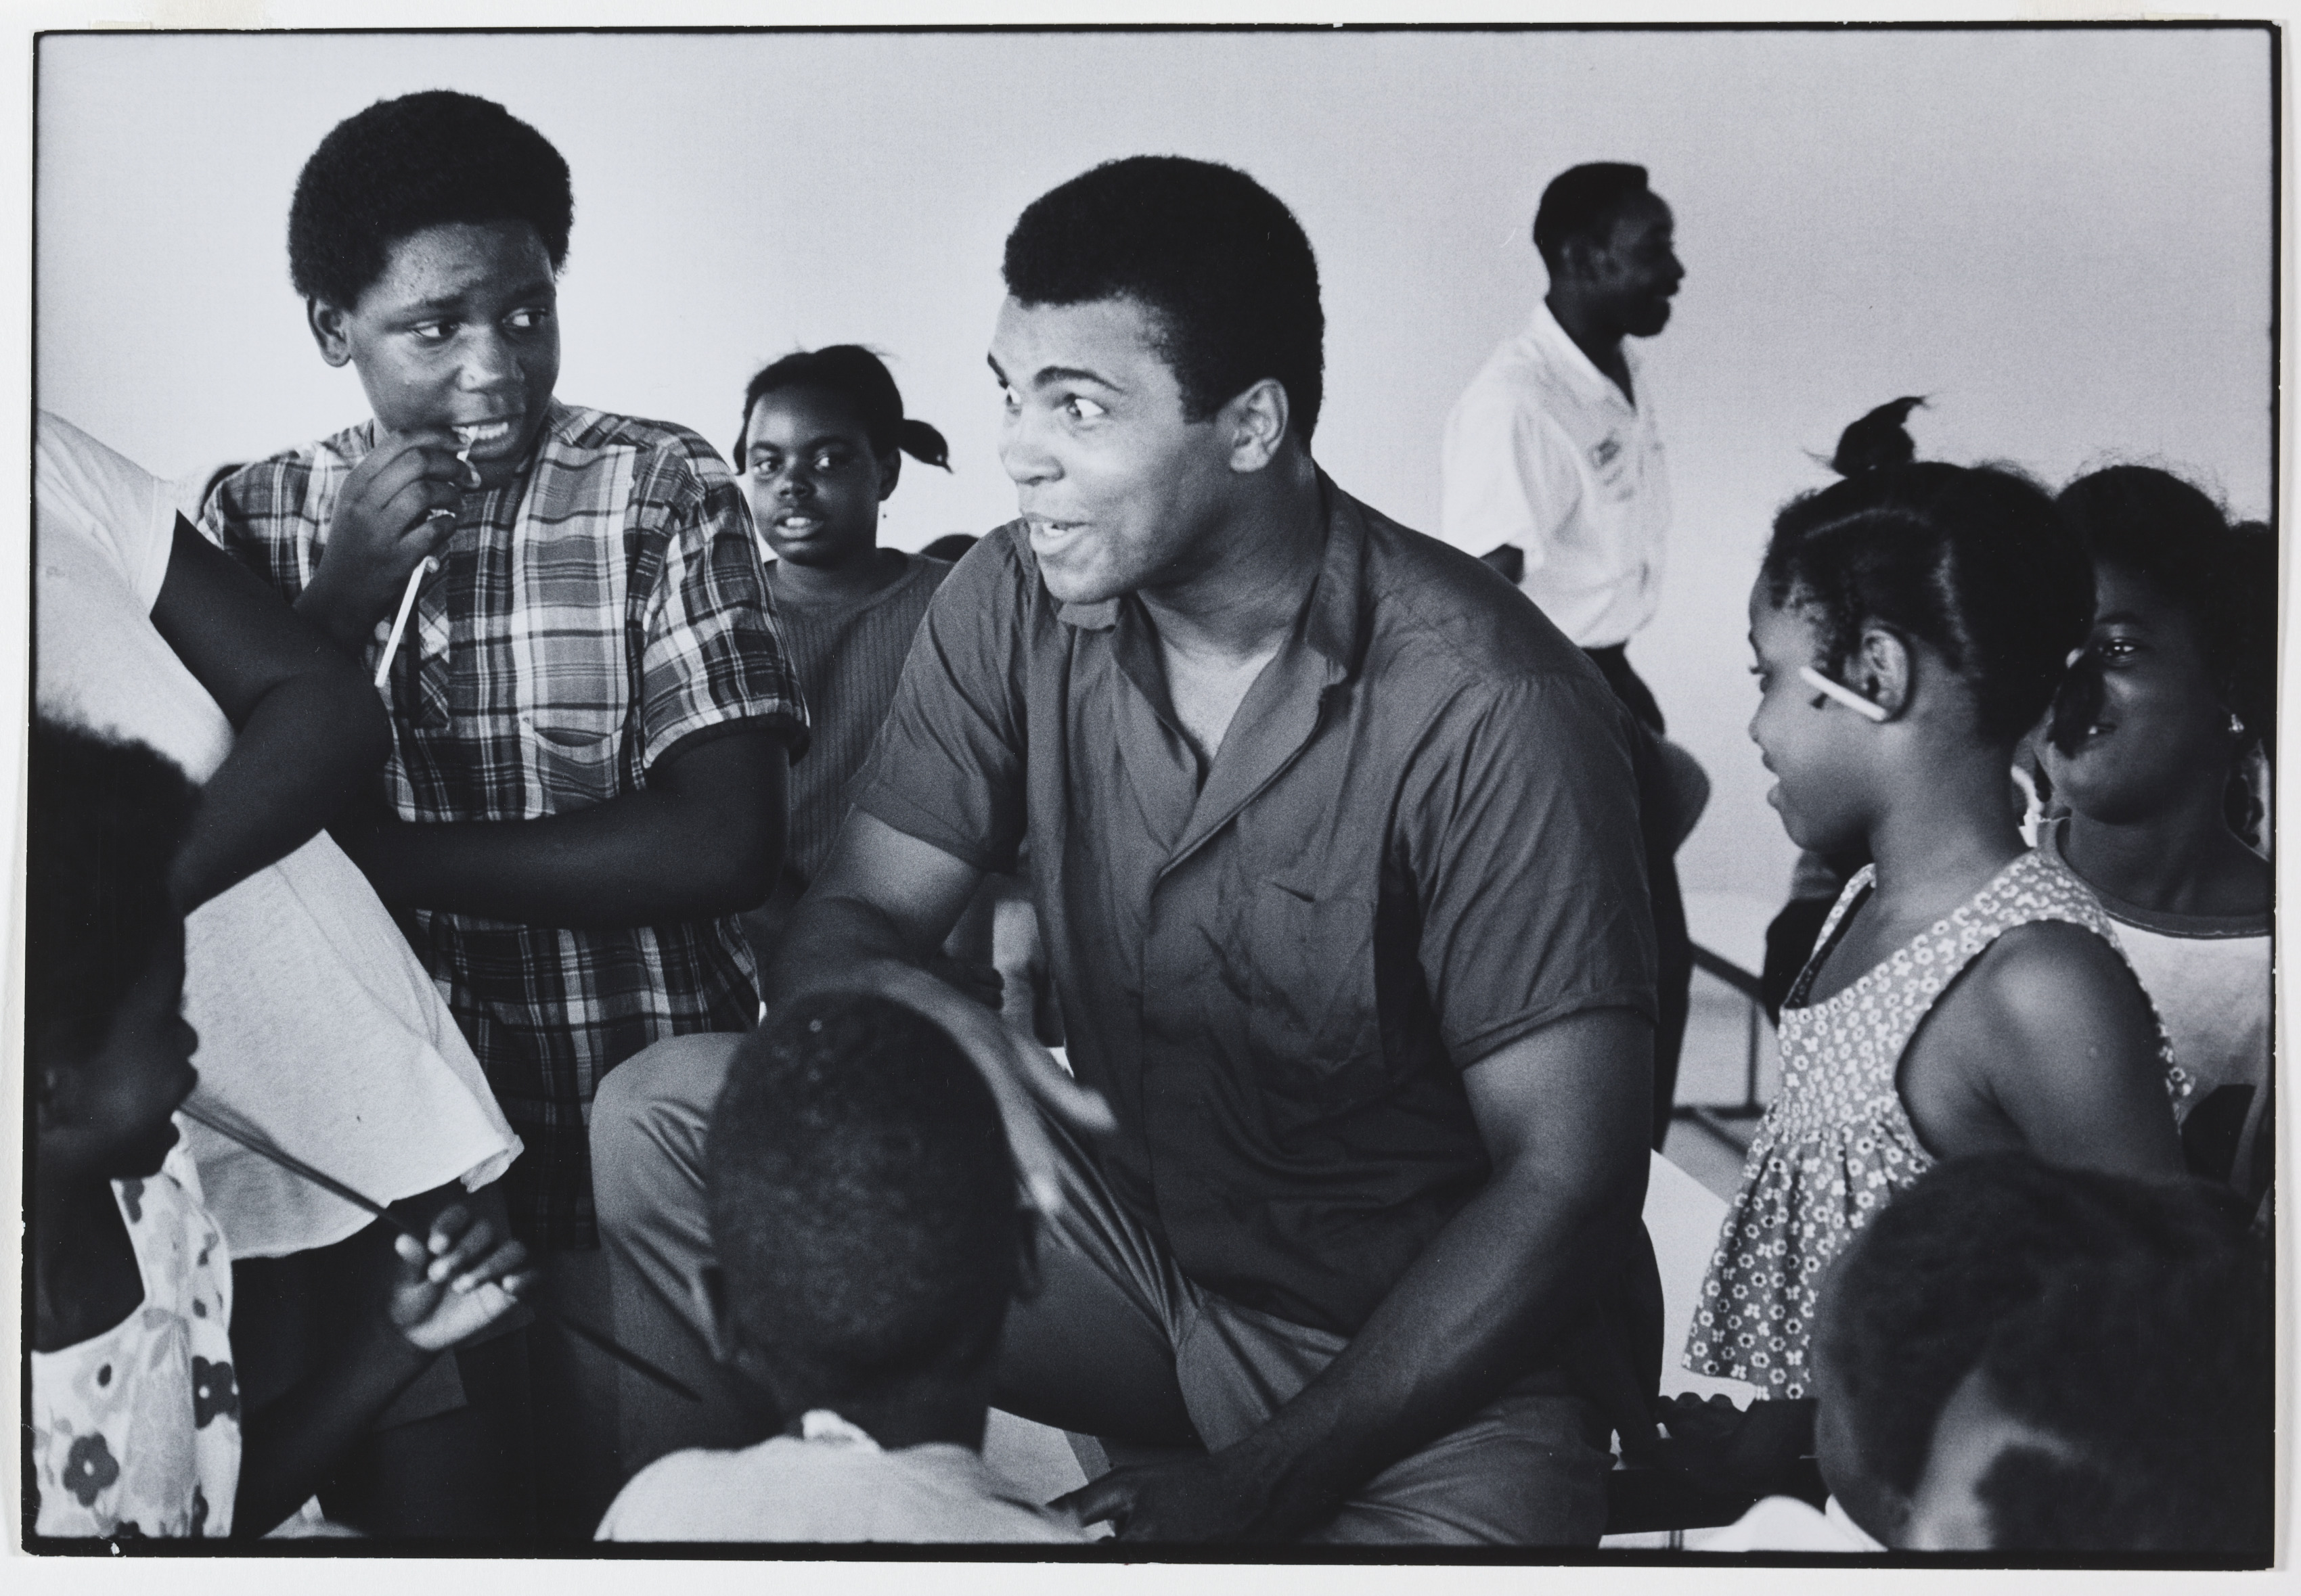 Untitled, Miami, Florida, 1970 (Muhammad Ali with Children)